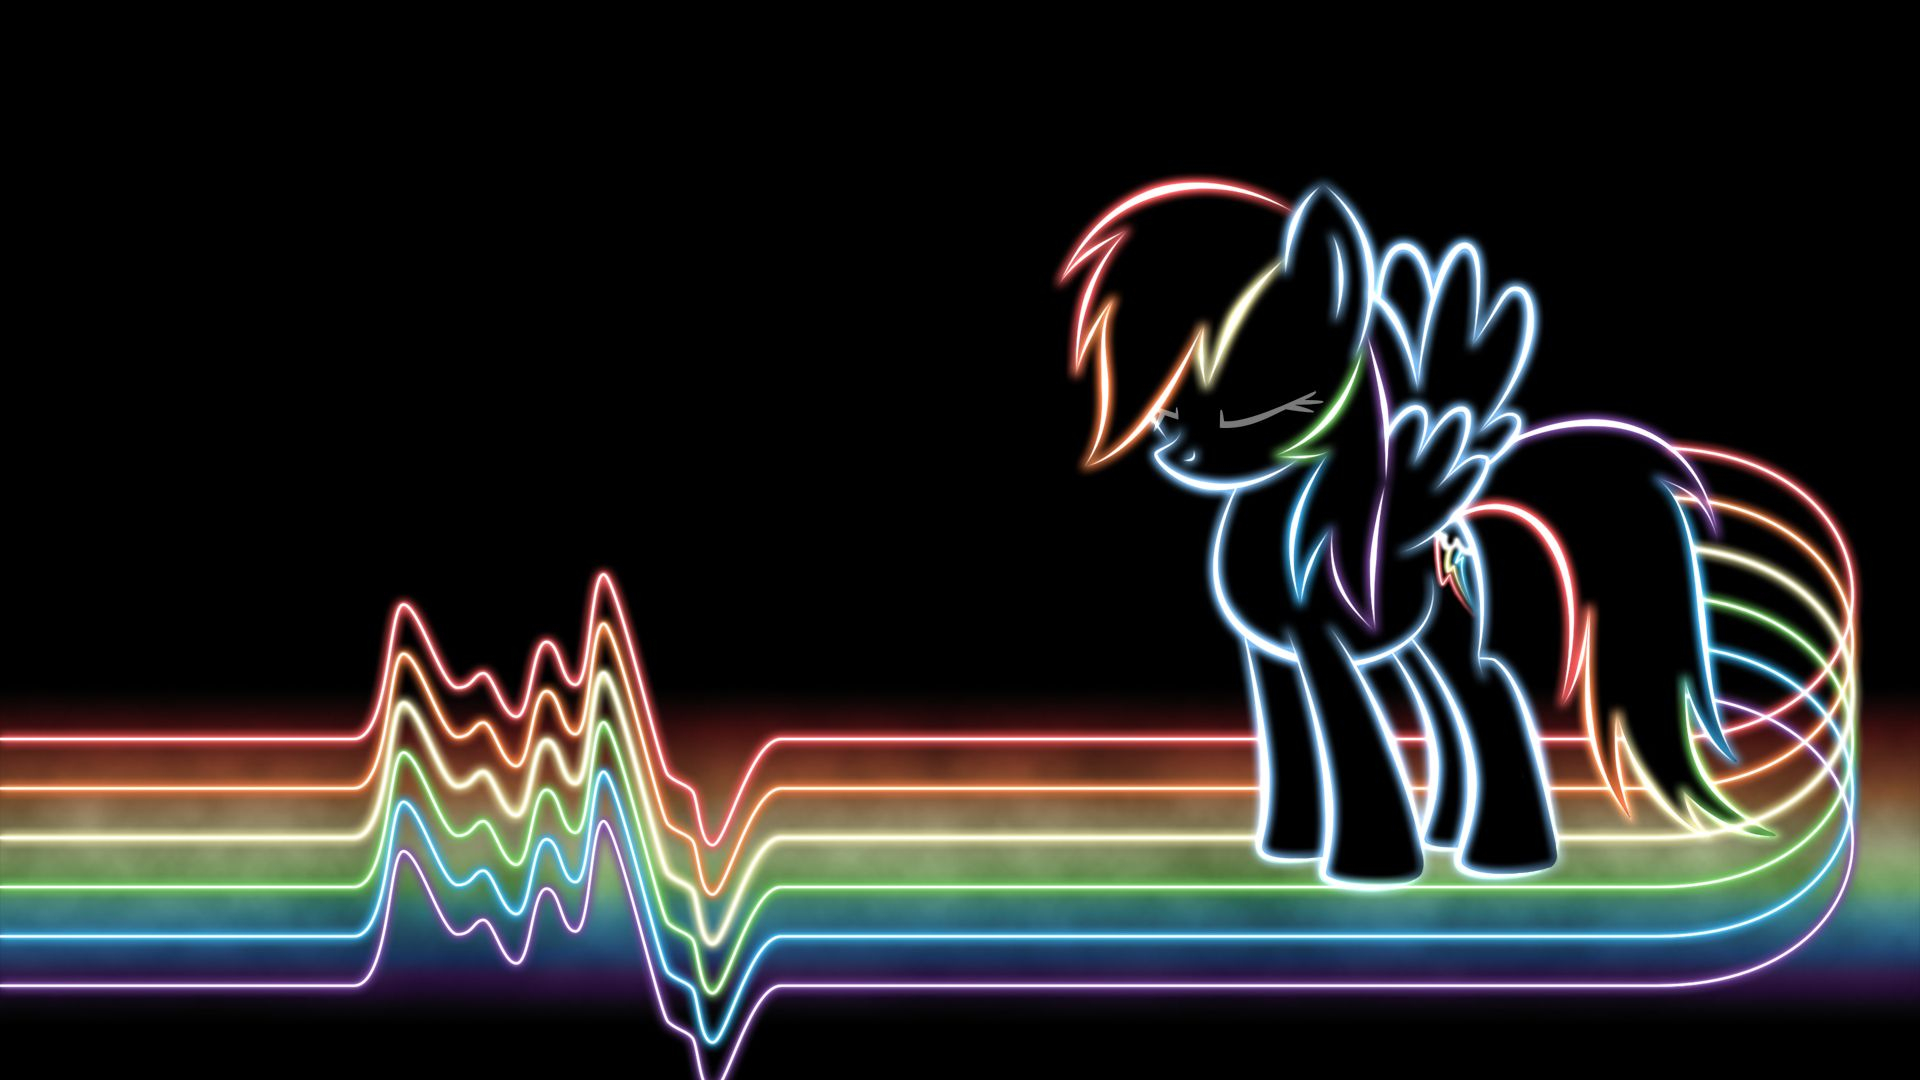 1920x1080 My Little Pony Friendship is Magic Wallpaper: MLP Glow Wallpapers | Rainbow dash, My little pony friendship, My little pony wallpaper